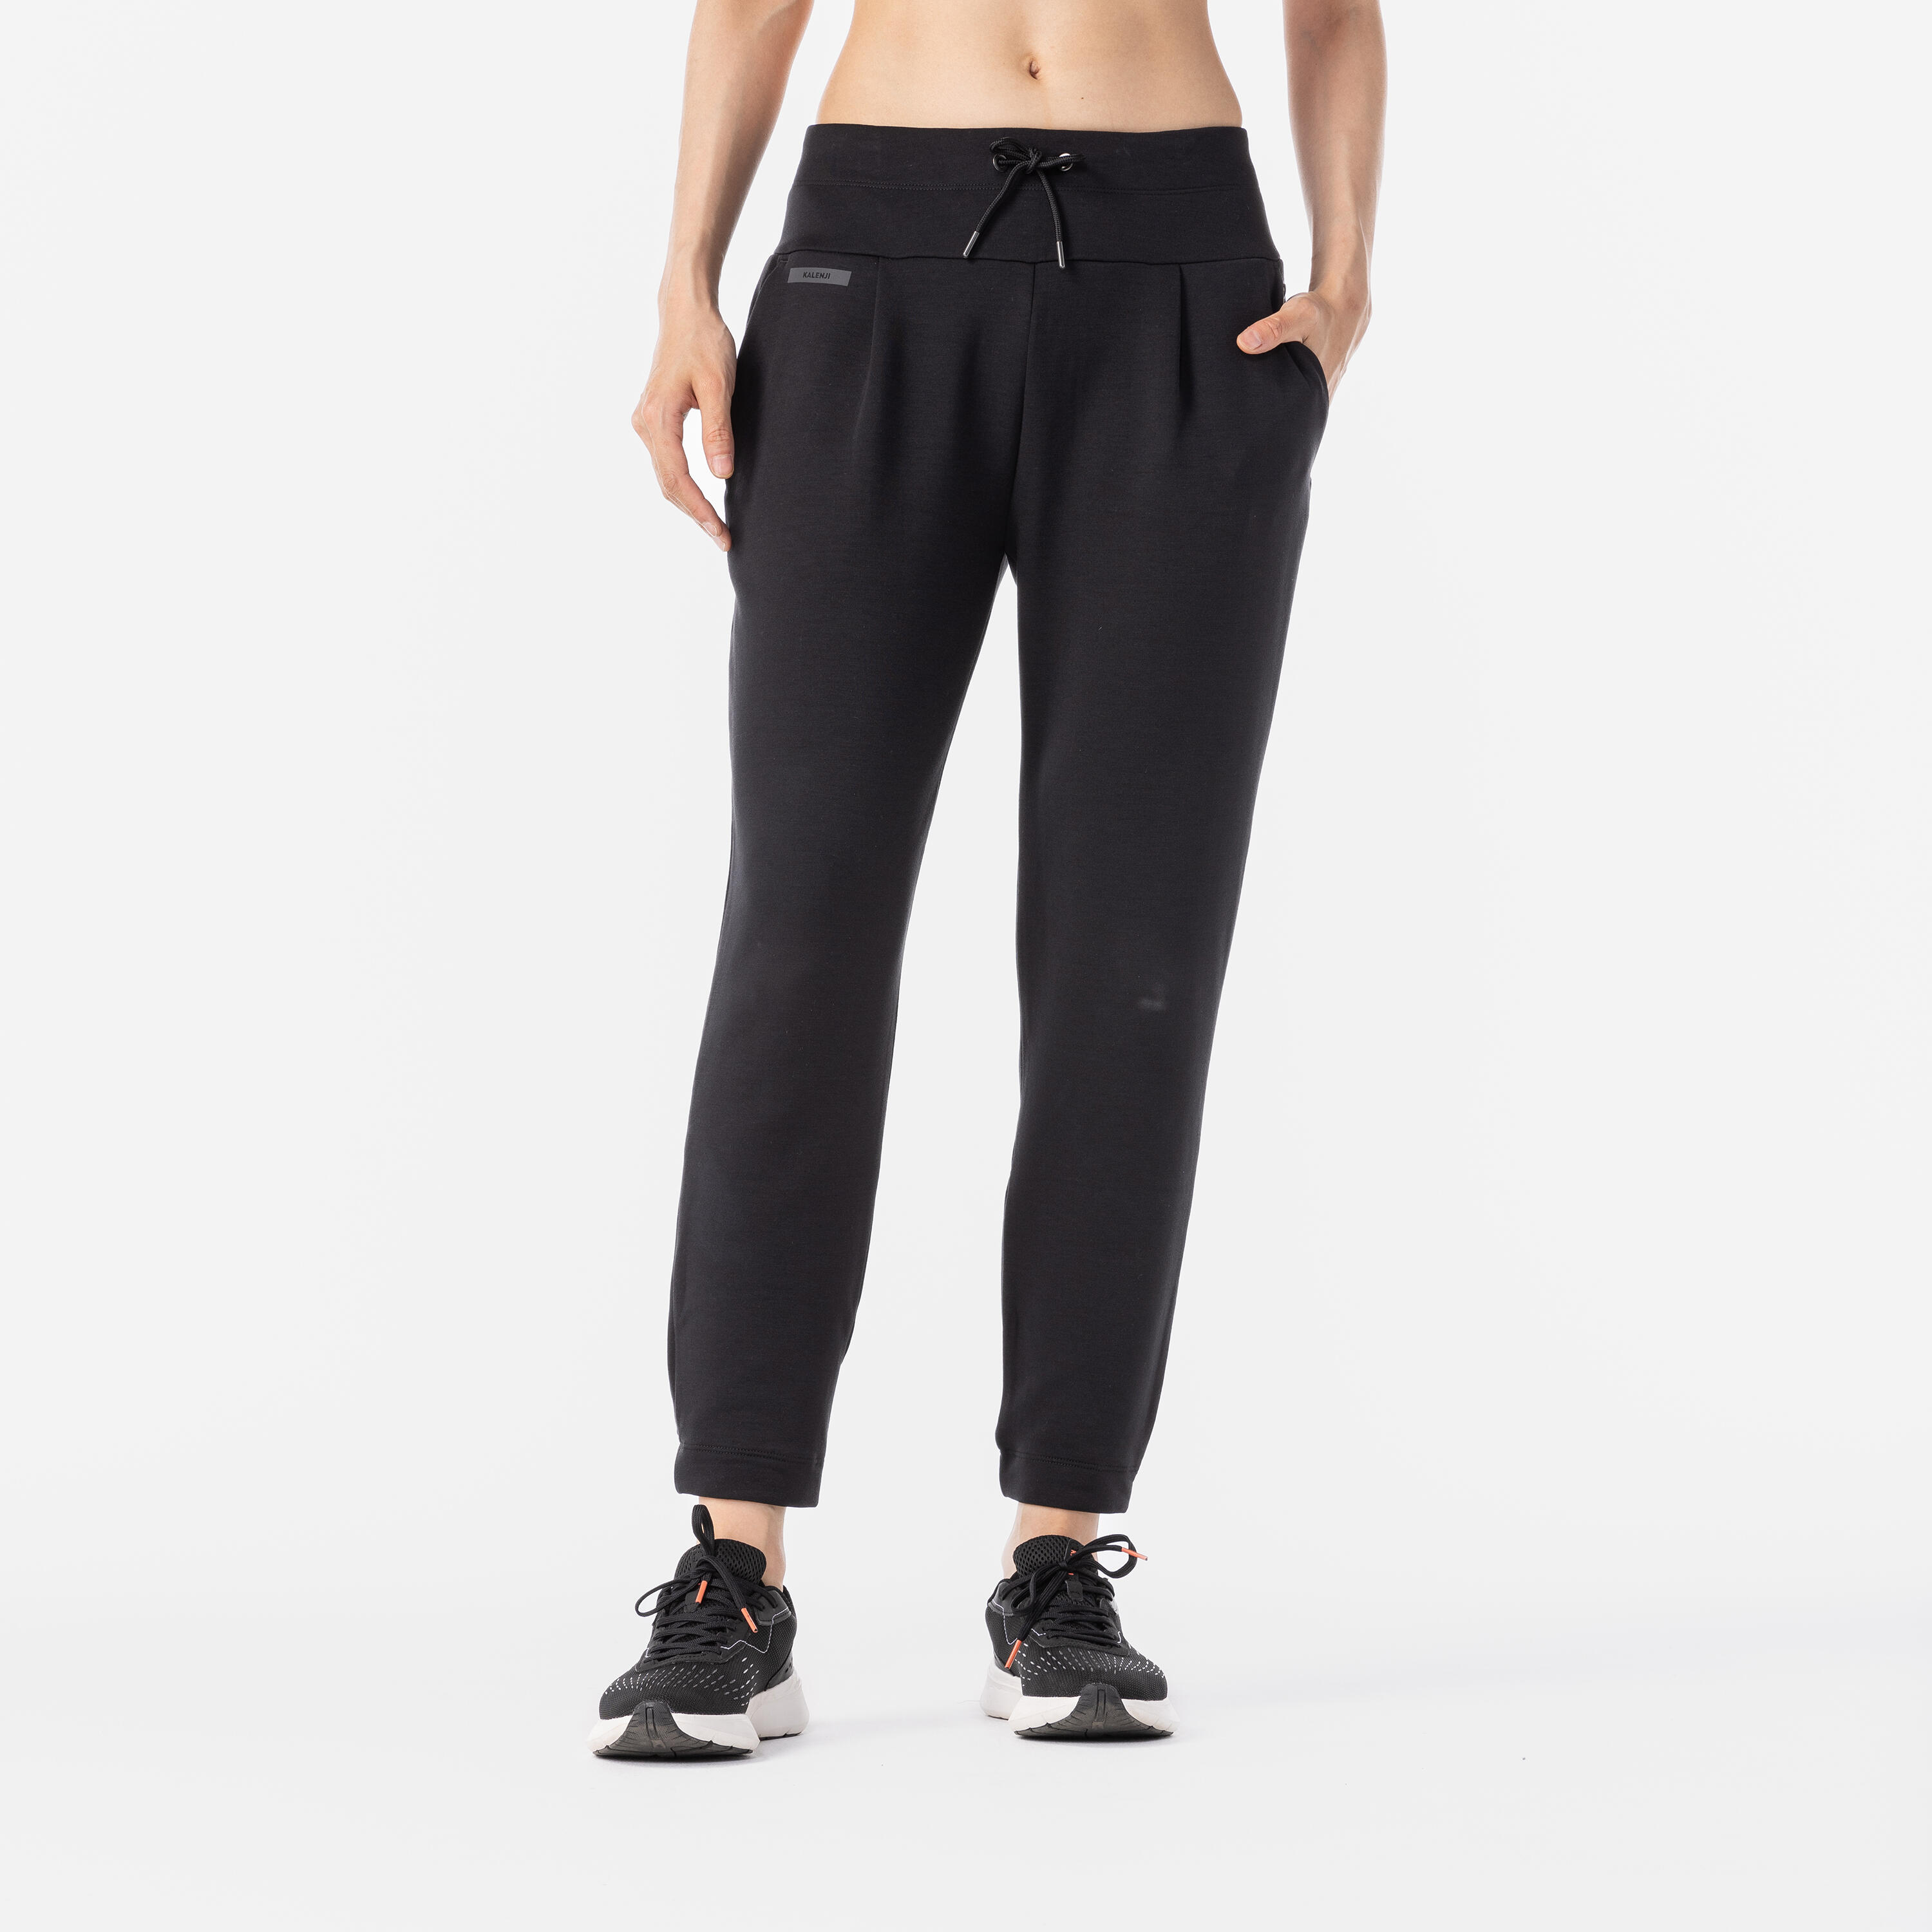 KALENJI 500 women's warm running/jogging trousers - black